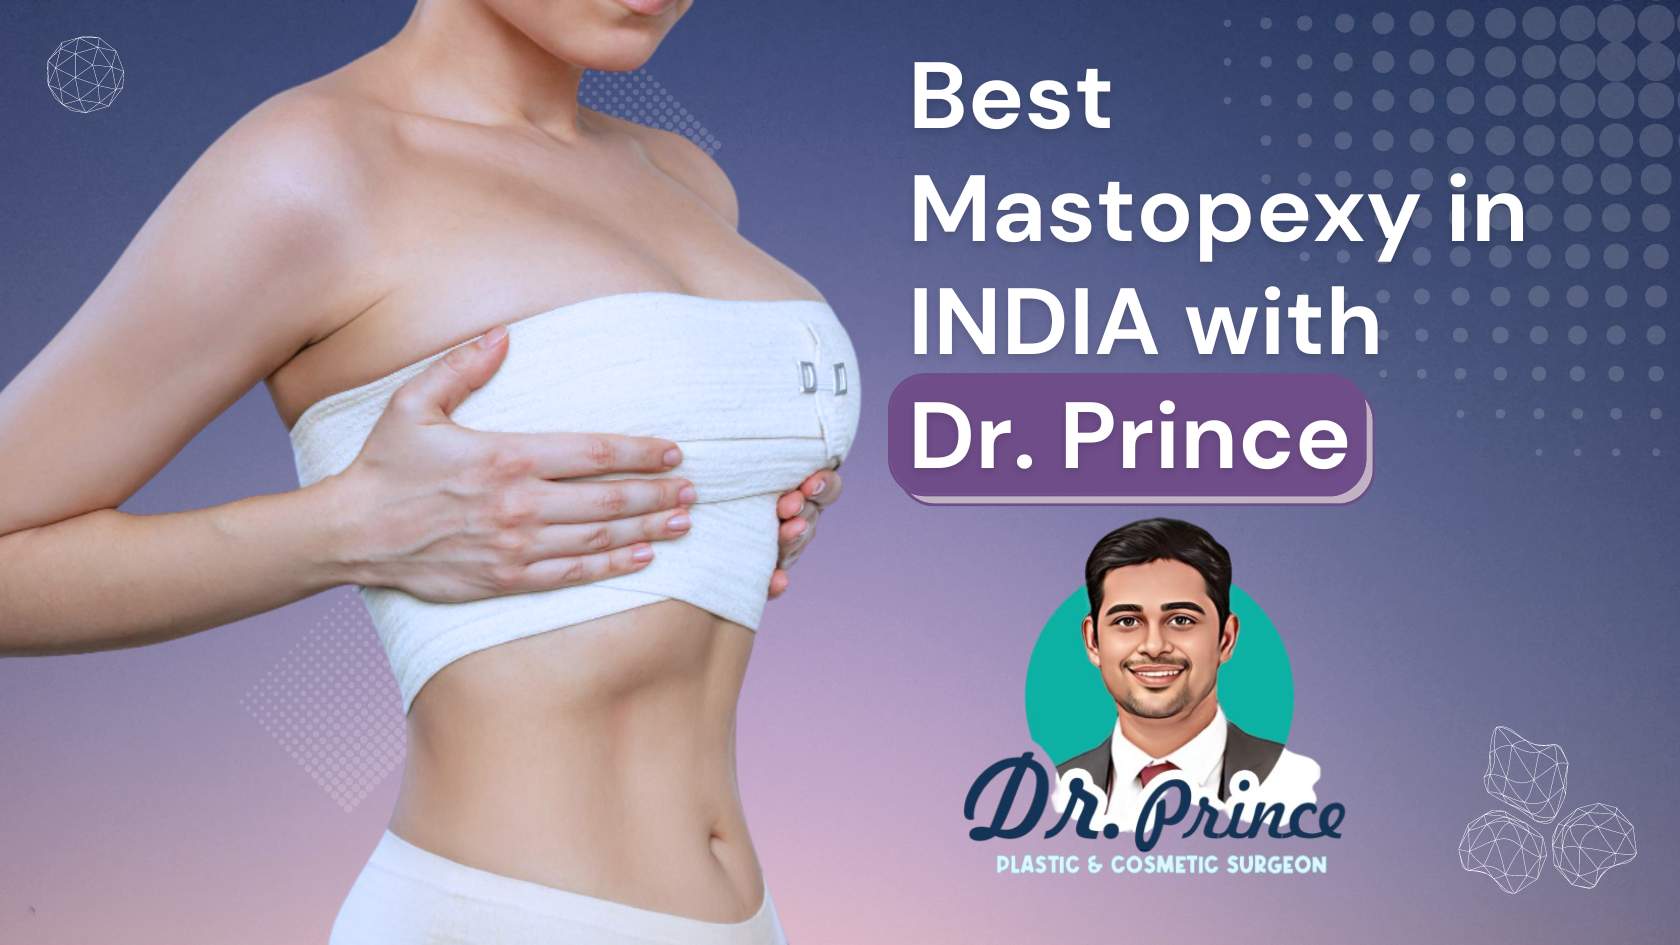 Mastopexy procedure in India